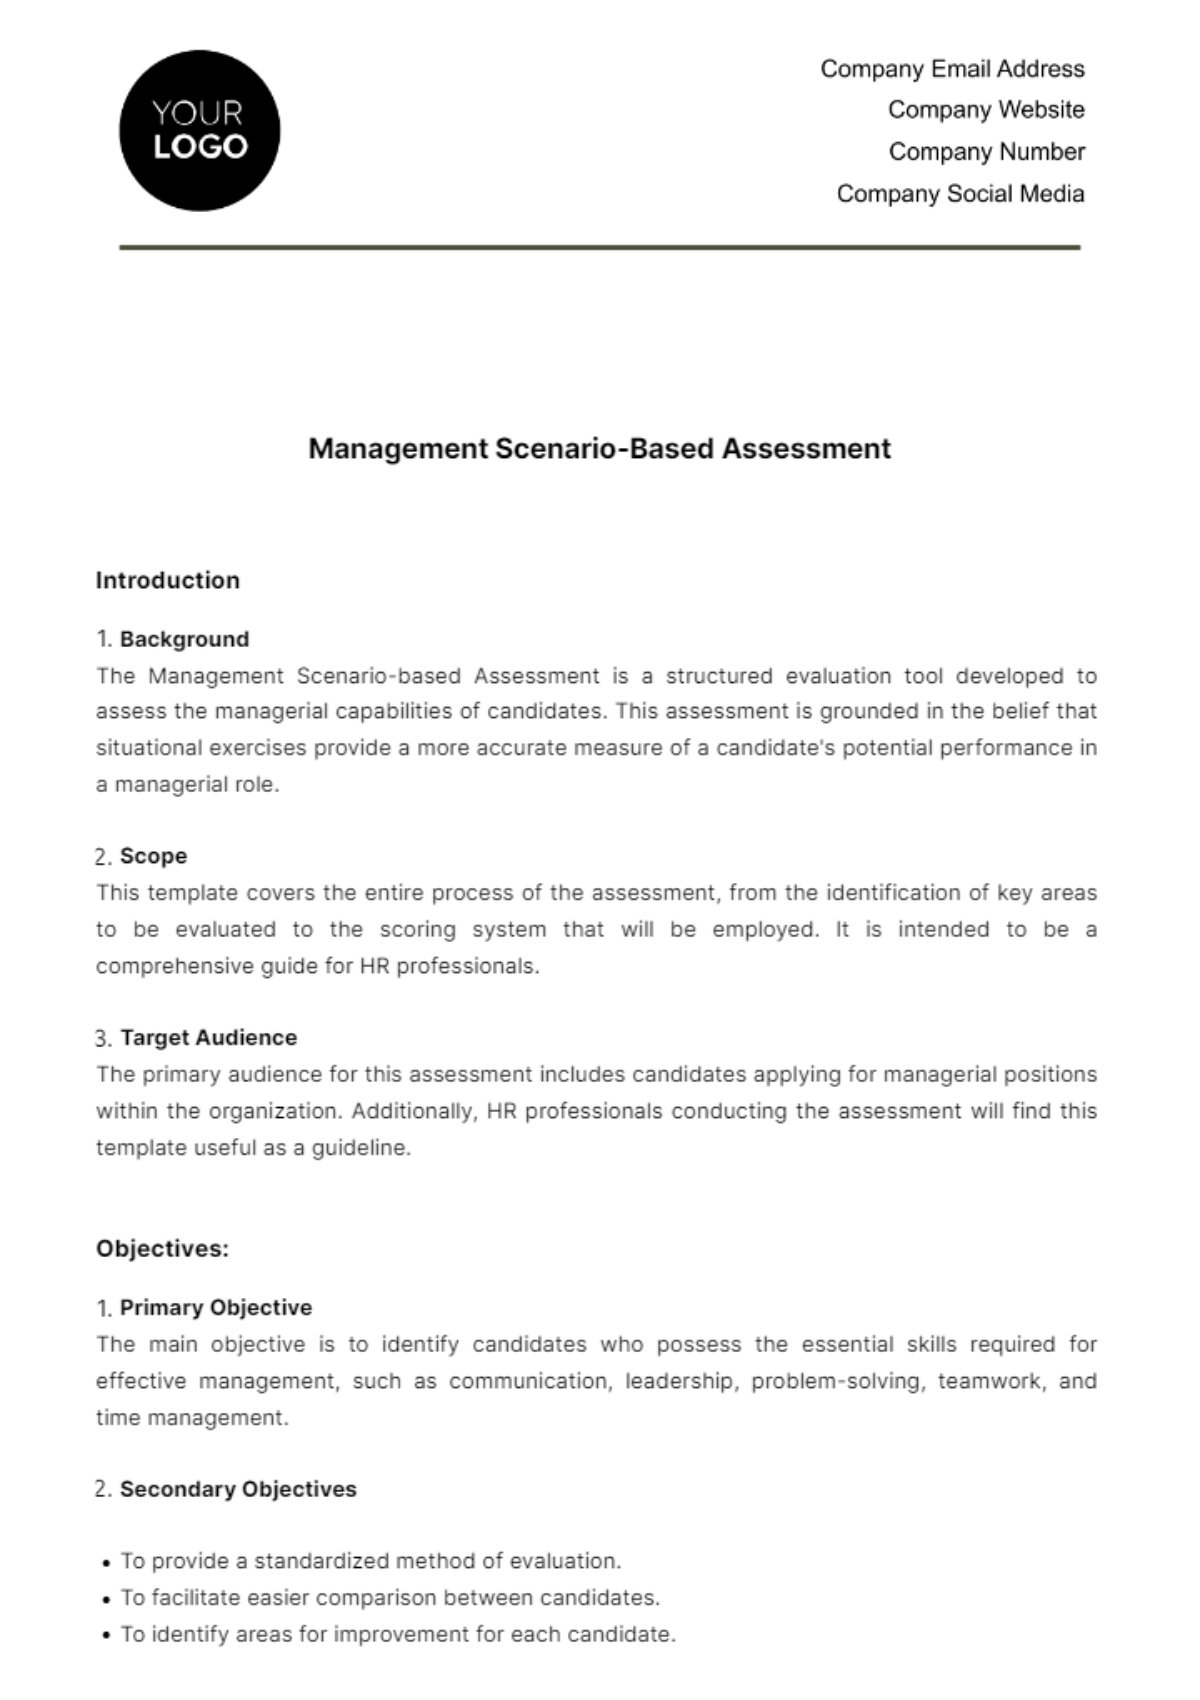 Free Management Scenario-based Assessment HR Template